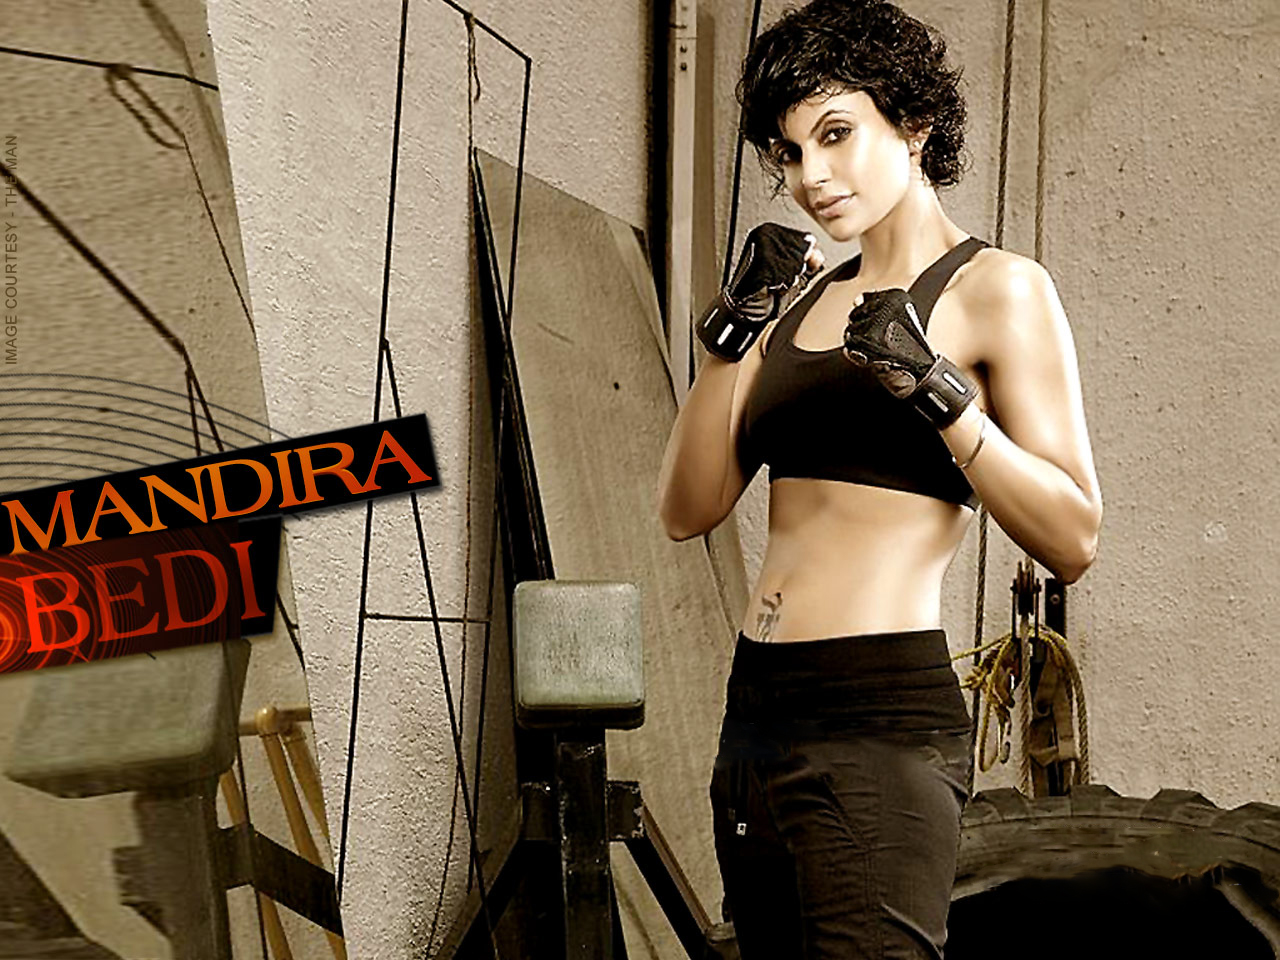 mandhira bedi hot bollywood actress and tv anchor wallpaper